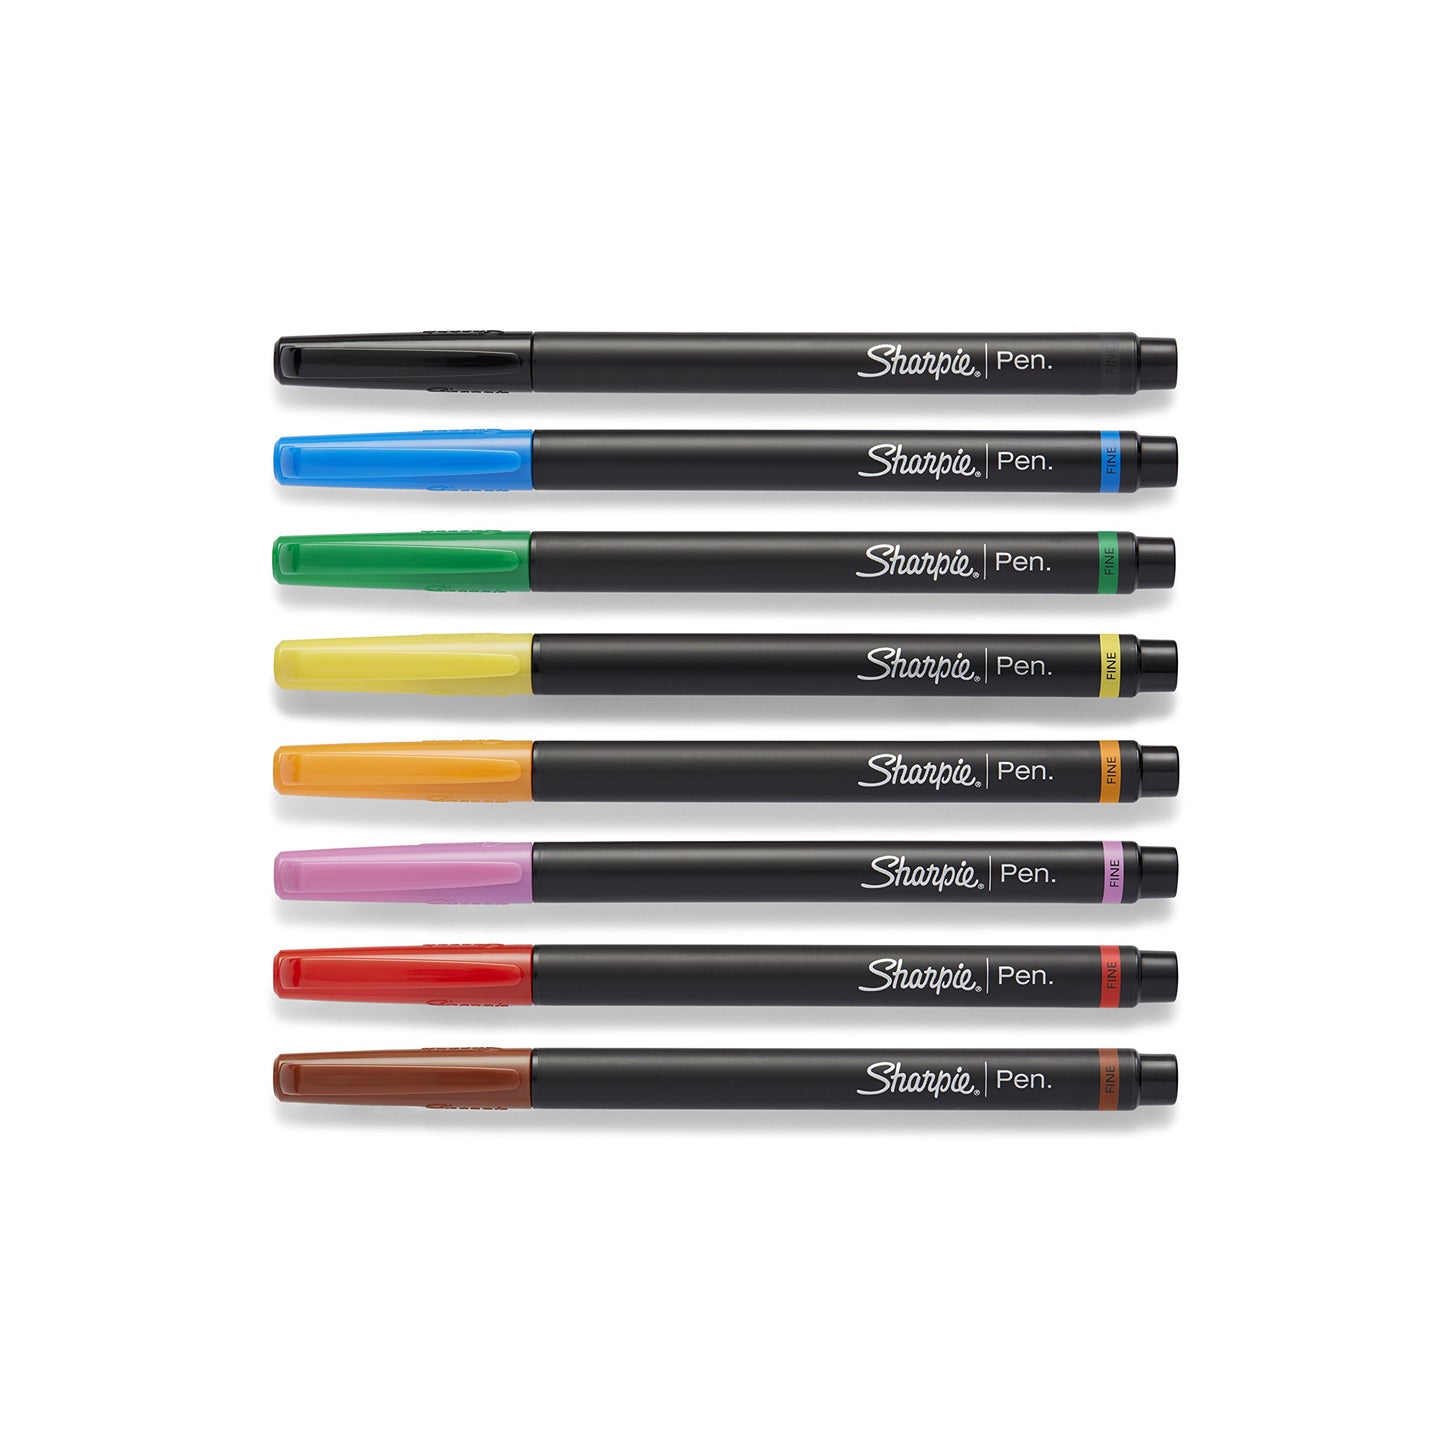 Sharpie Art Pens, Fine Point, Assorted Colors, Hard Case, 8 Pack (1982056)